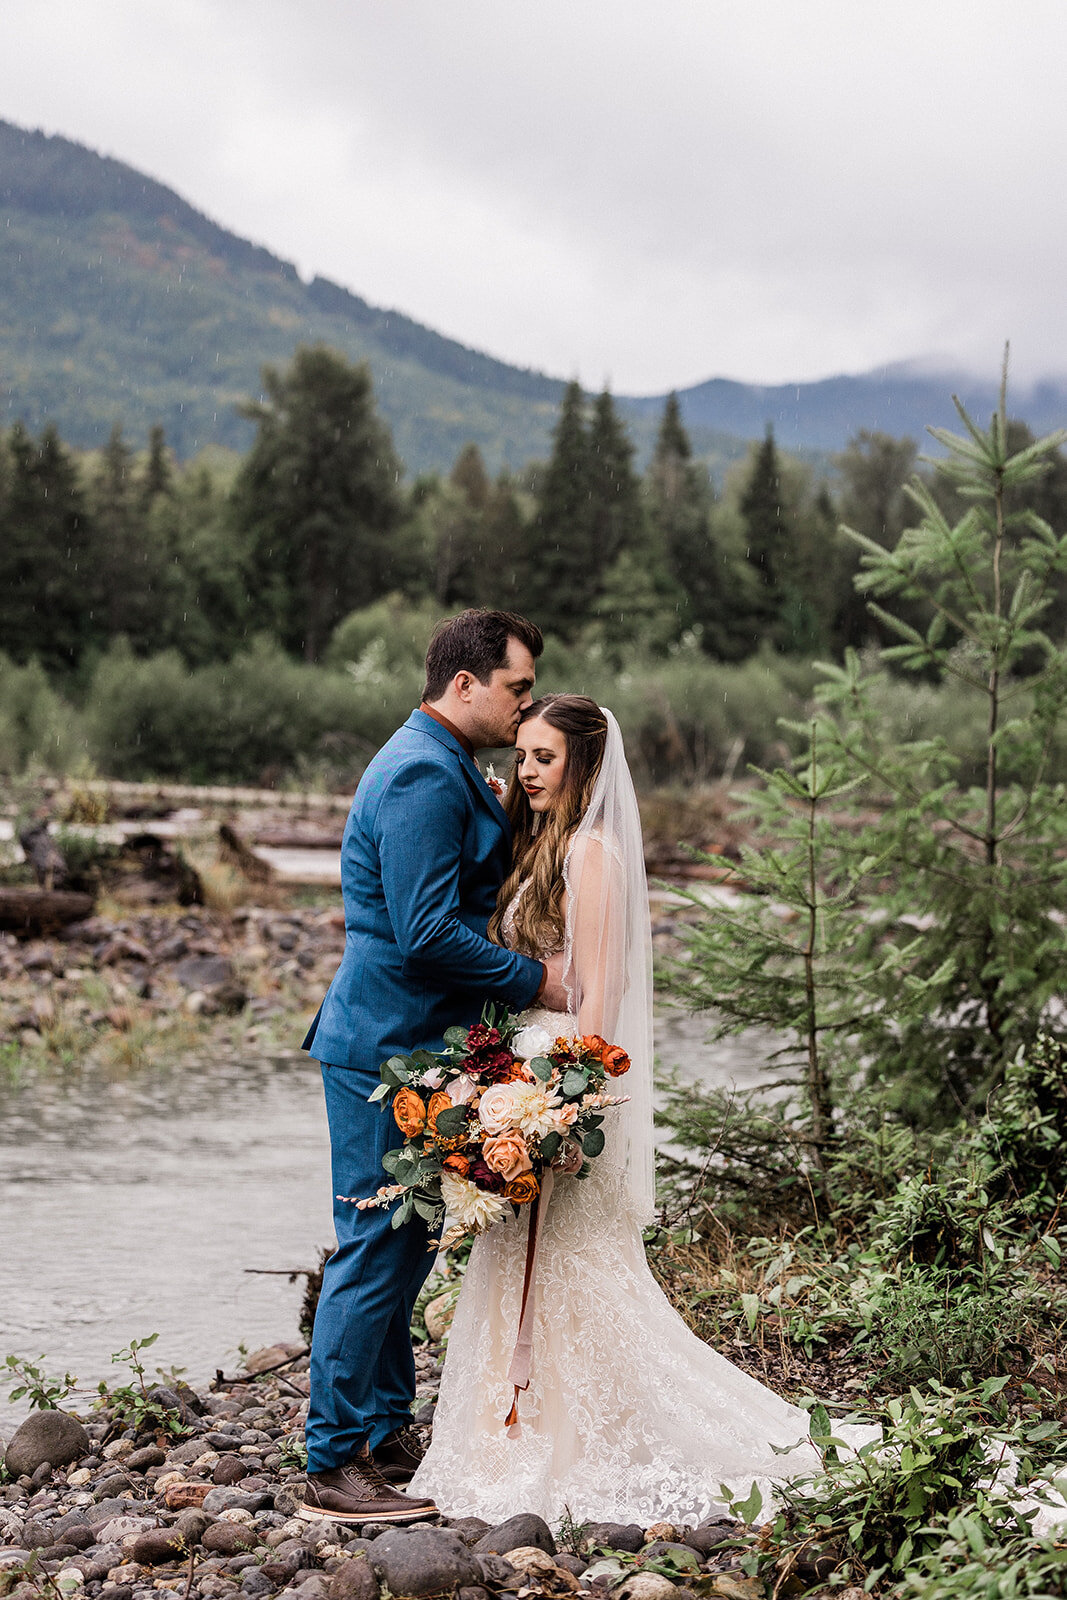 Rainy-Mount-Rainier-National-Park-Intimate-Wedding-68